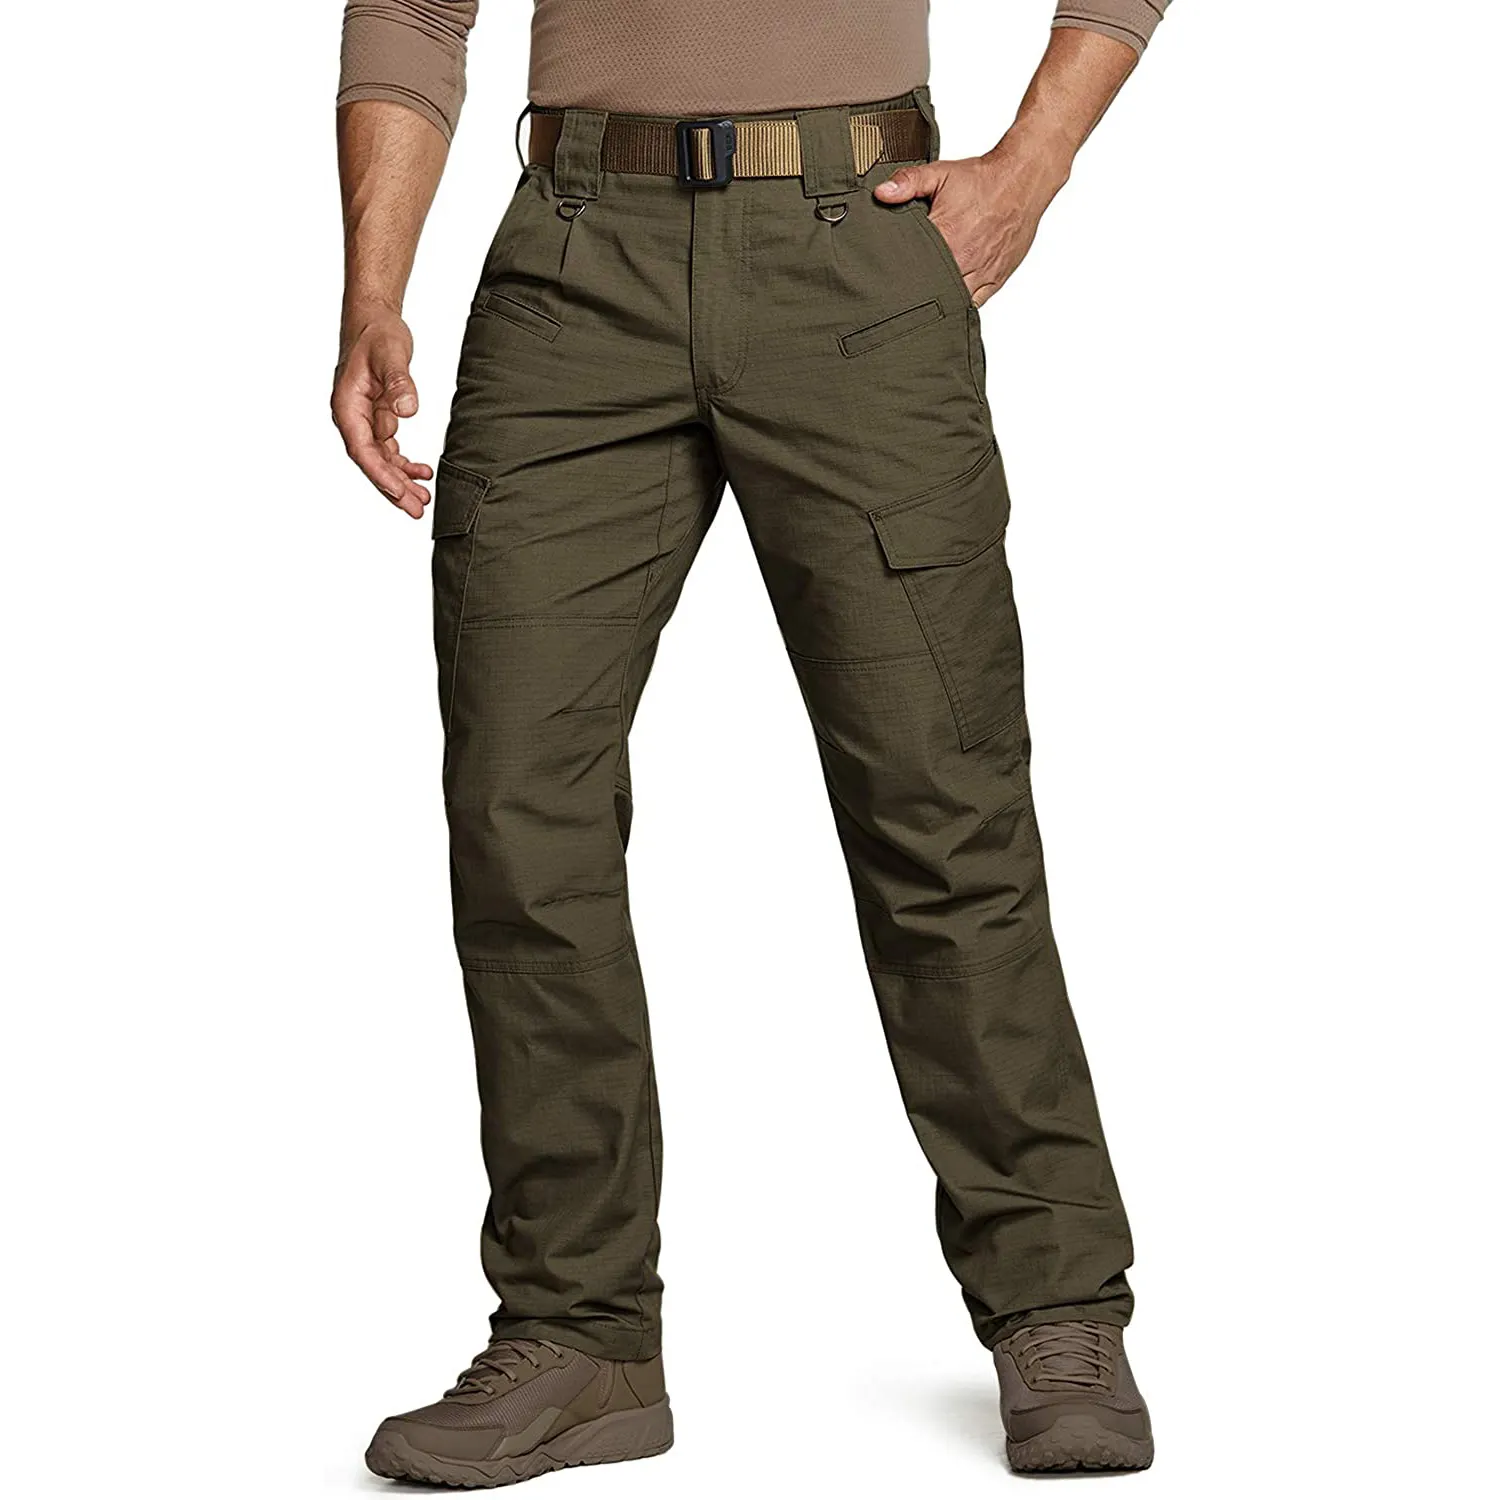 Men's Camping Travel Pants Ripstop Waterproof Pants Combat Tactical Trousers